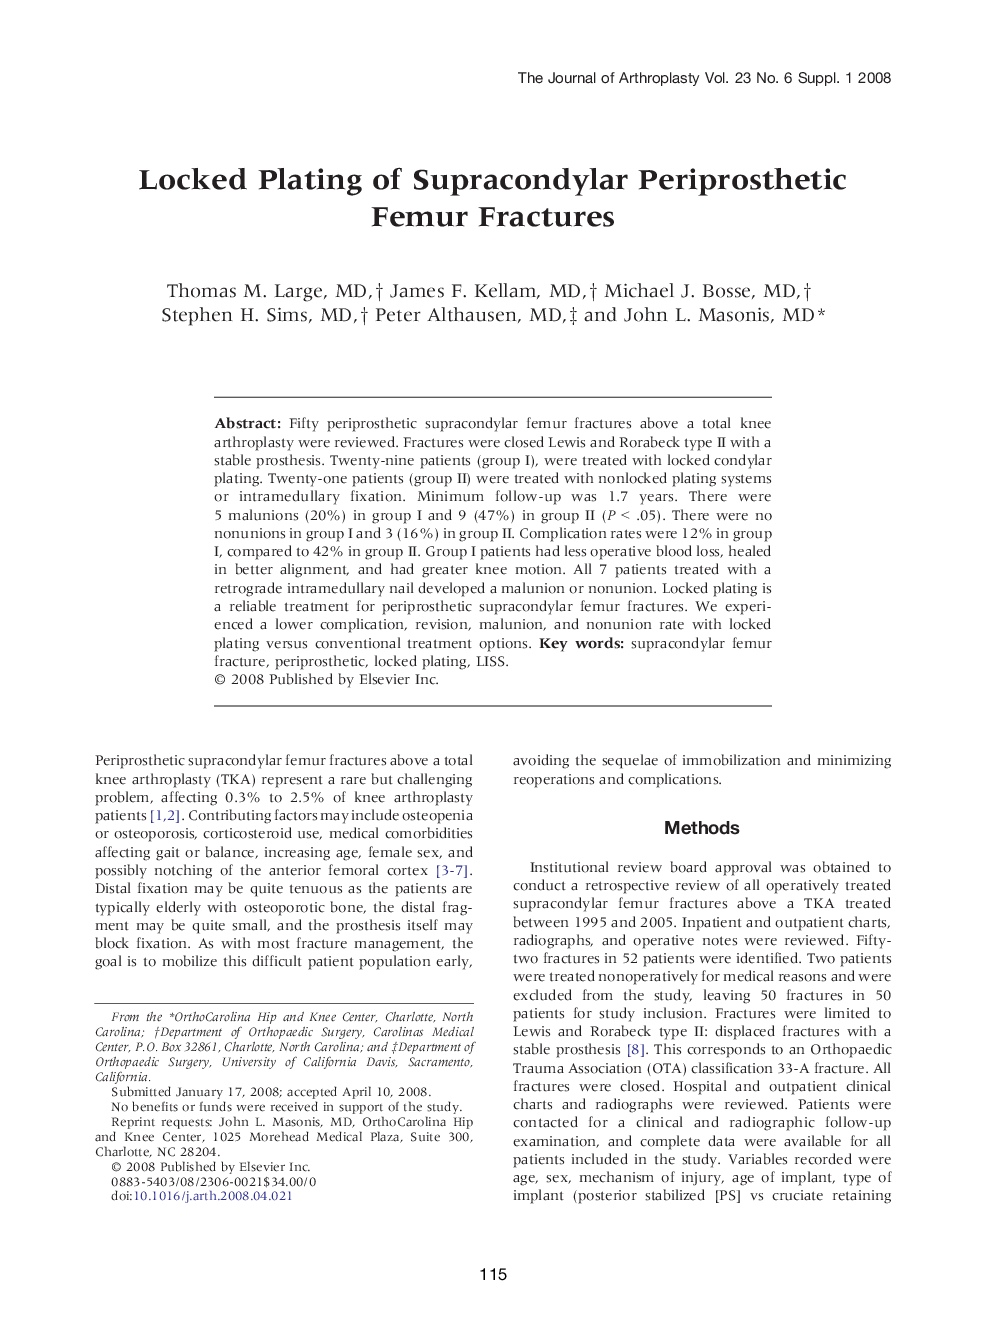 Locked Plating of Supracondylar Periprosthetic Femur Fractures 